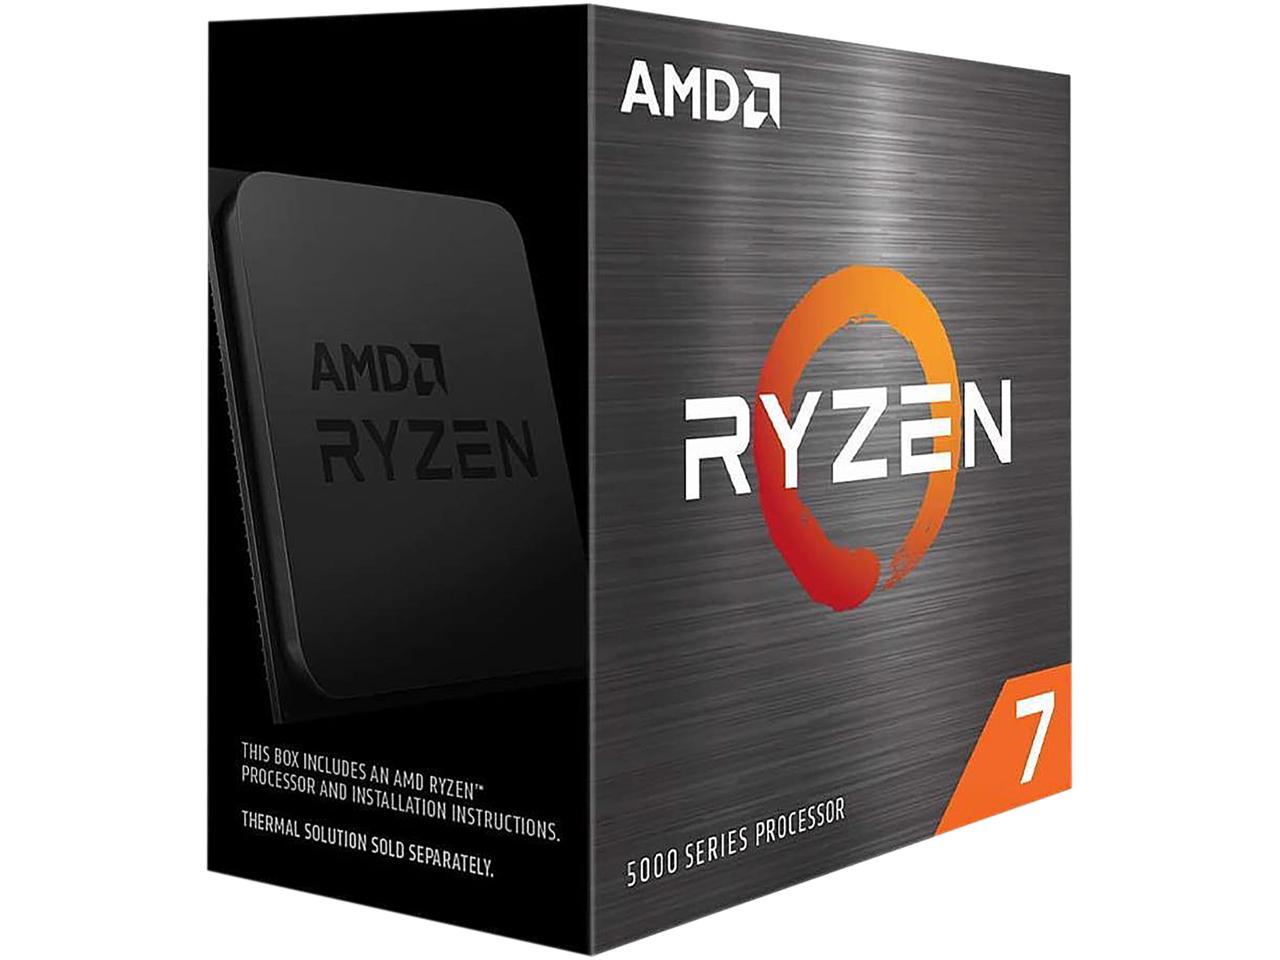 AMD Ryzen 7 5700X 3.4GHz 8-Core / 16-Thread AM4 Desktop Processor (Processor Only) $199 + Free Shipping